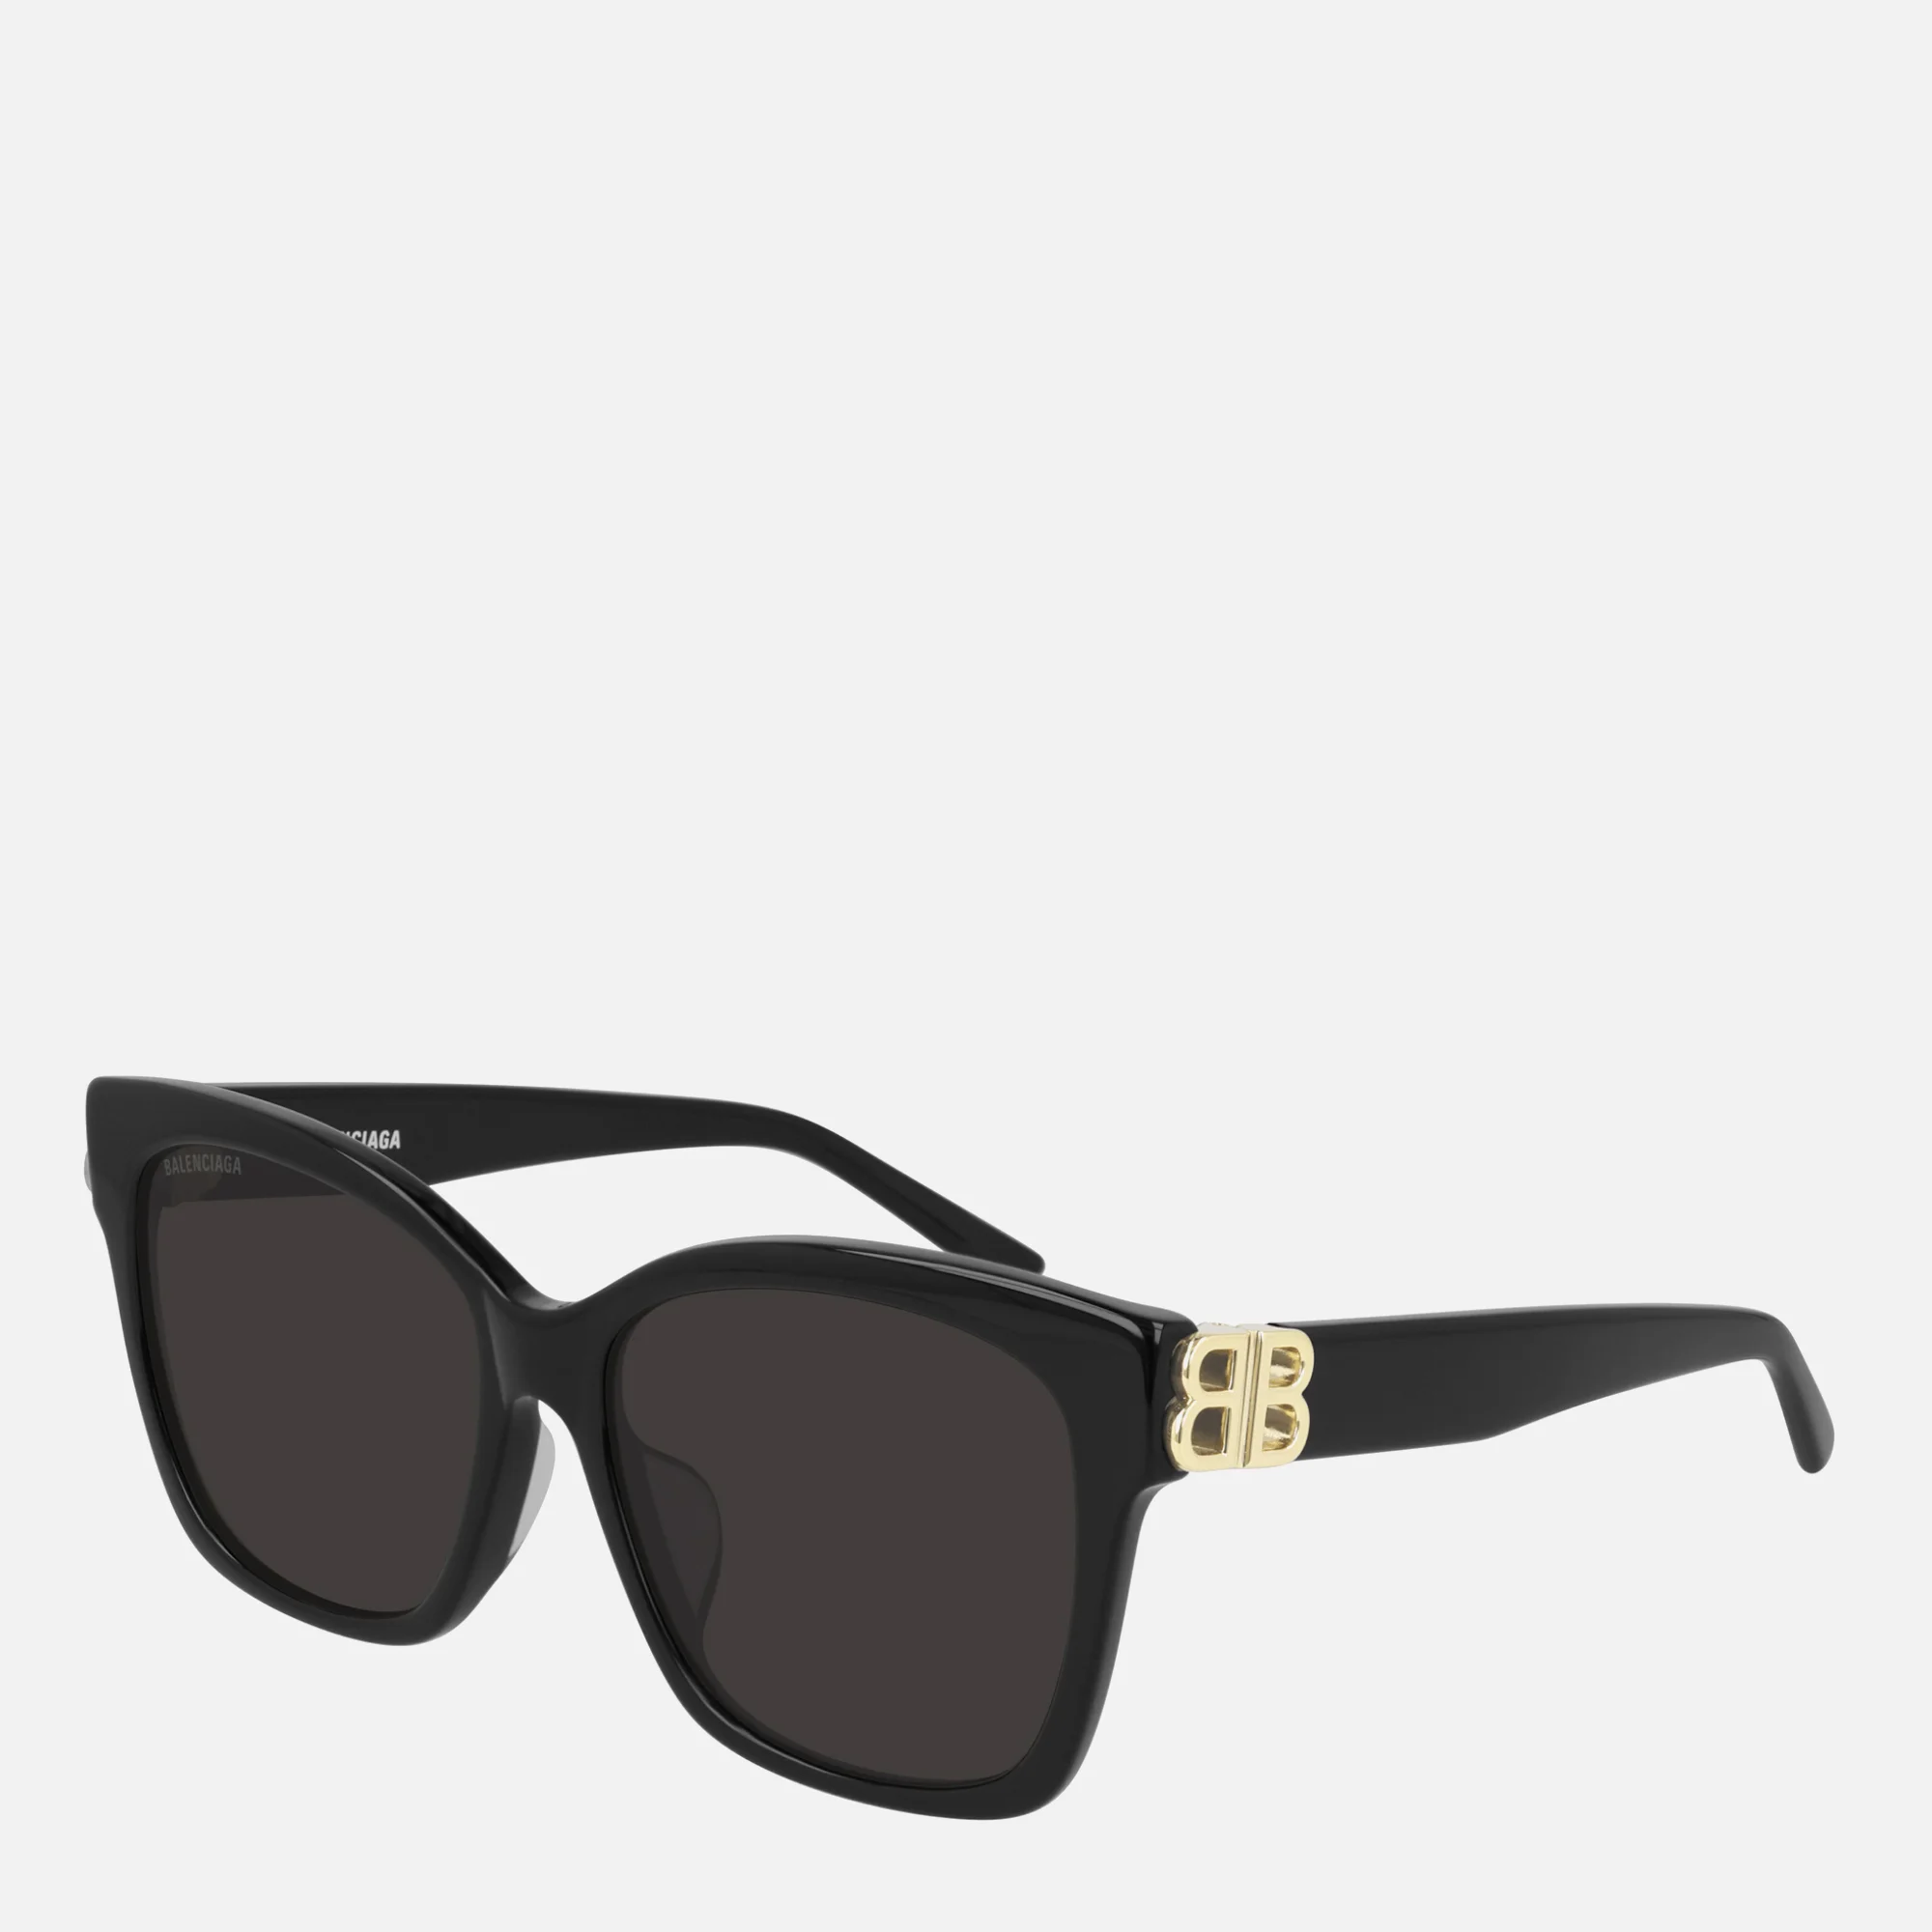 Balenciaga Women's Square Acetate Sunglasses - Black Image 1